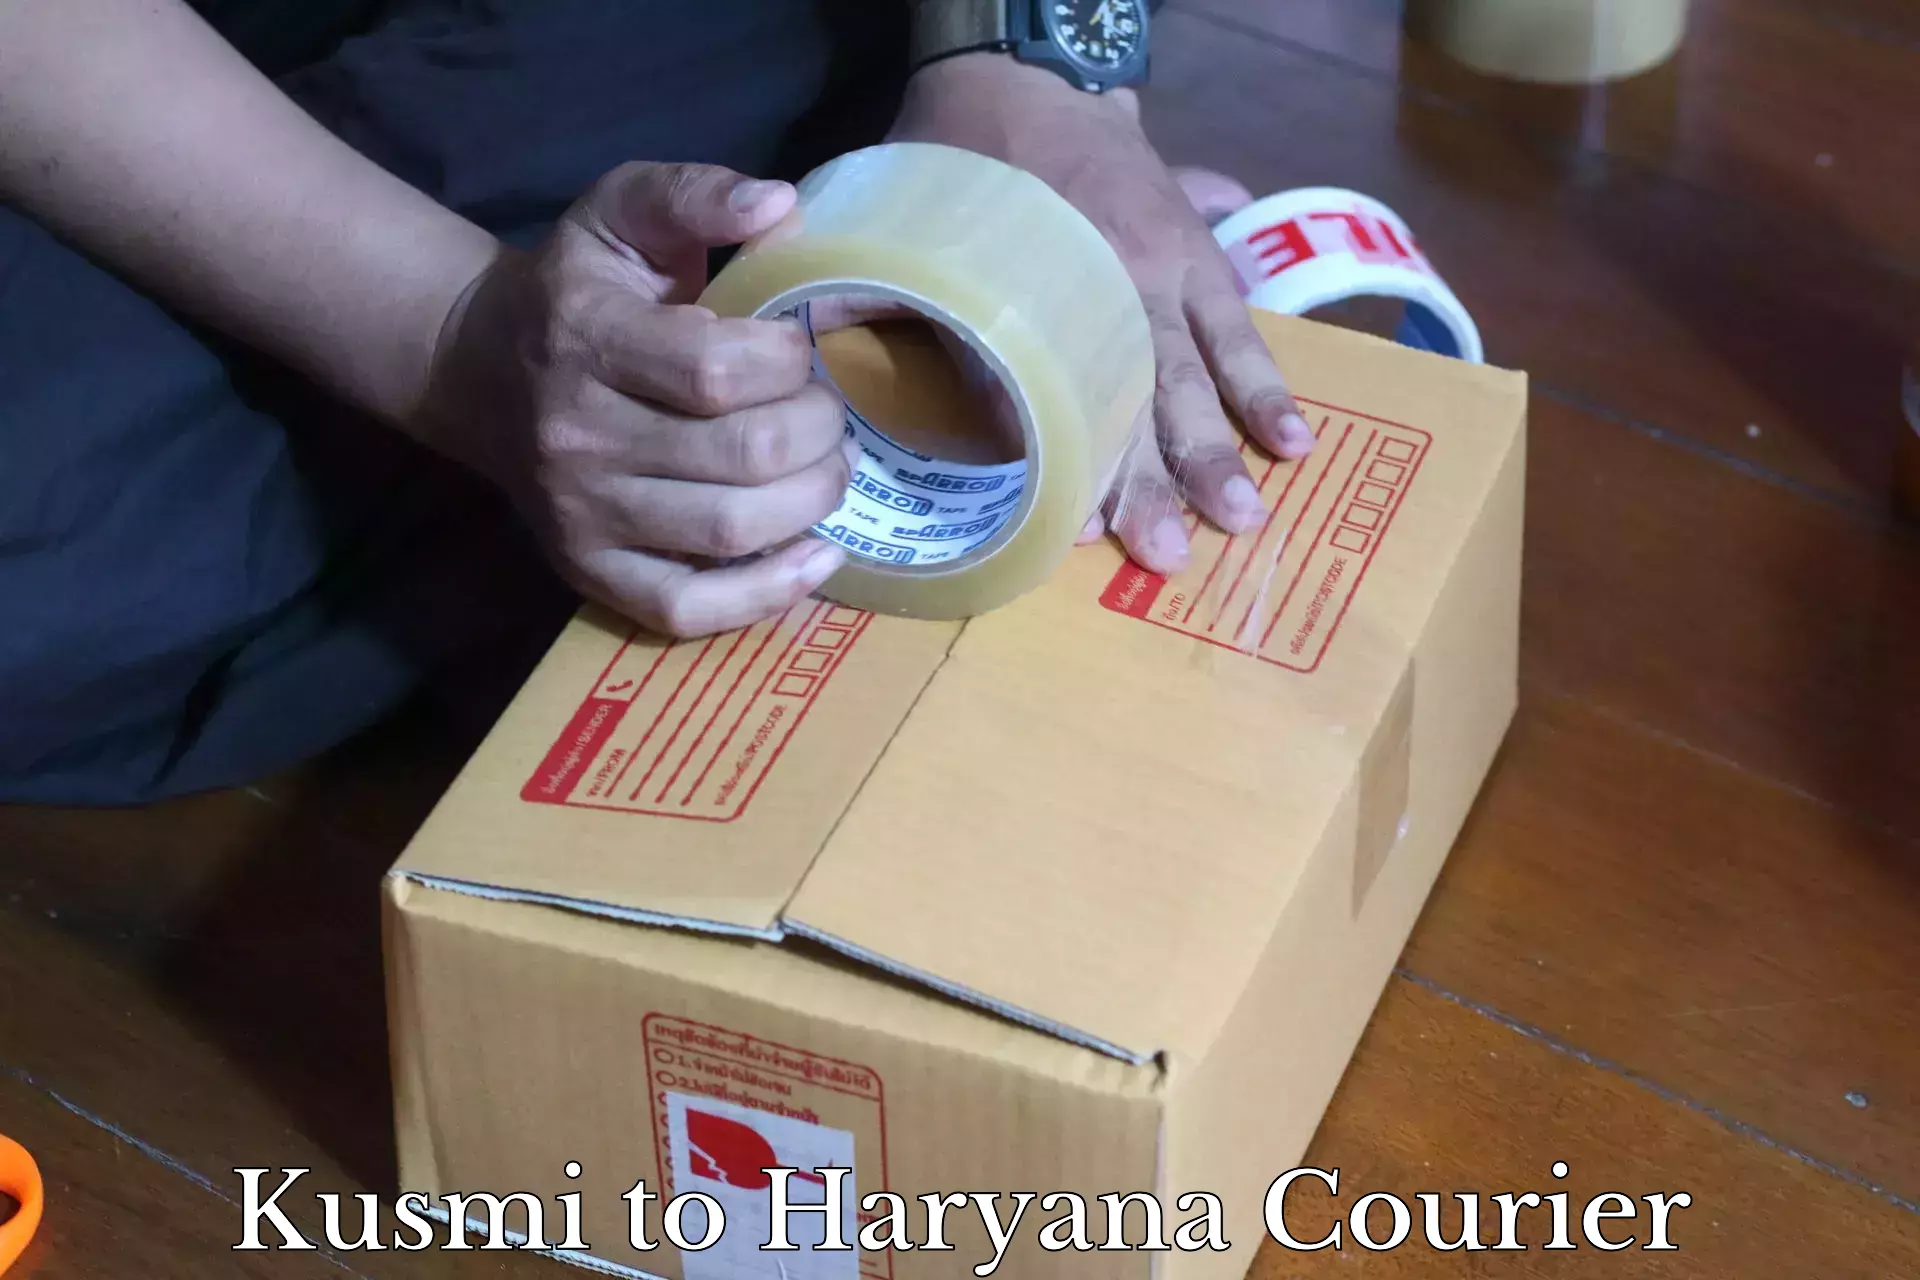 Courier service partnerships Kusmi to NCR Haryana